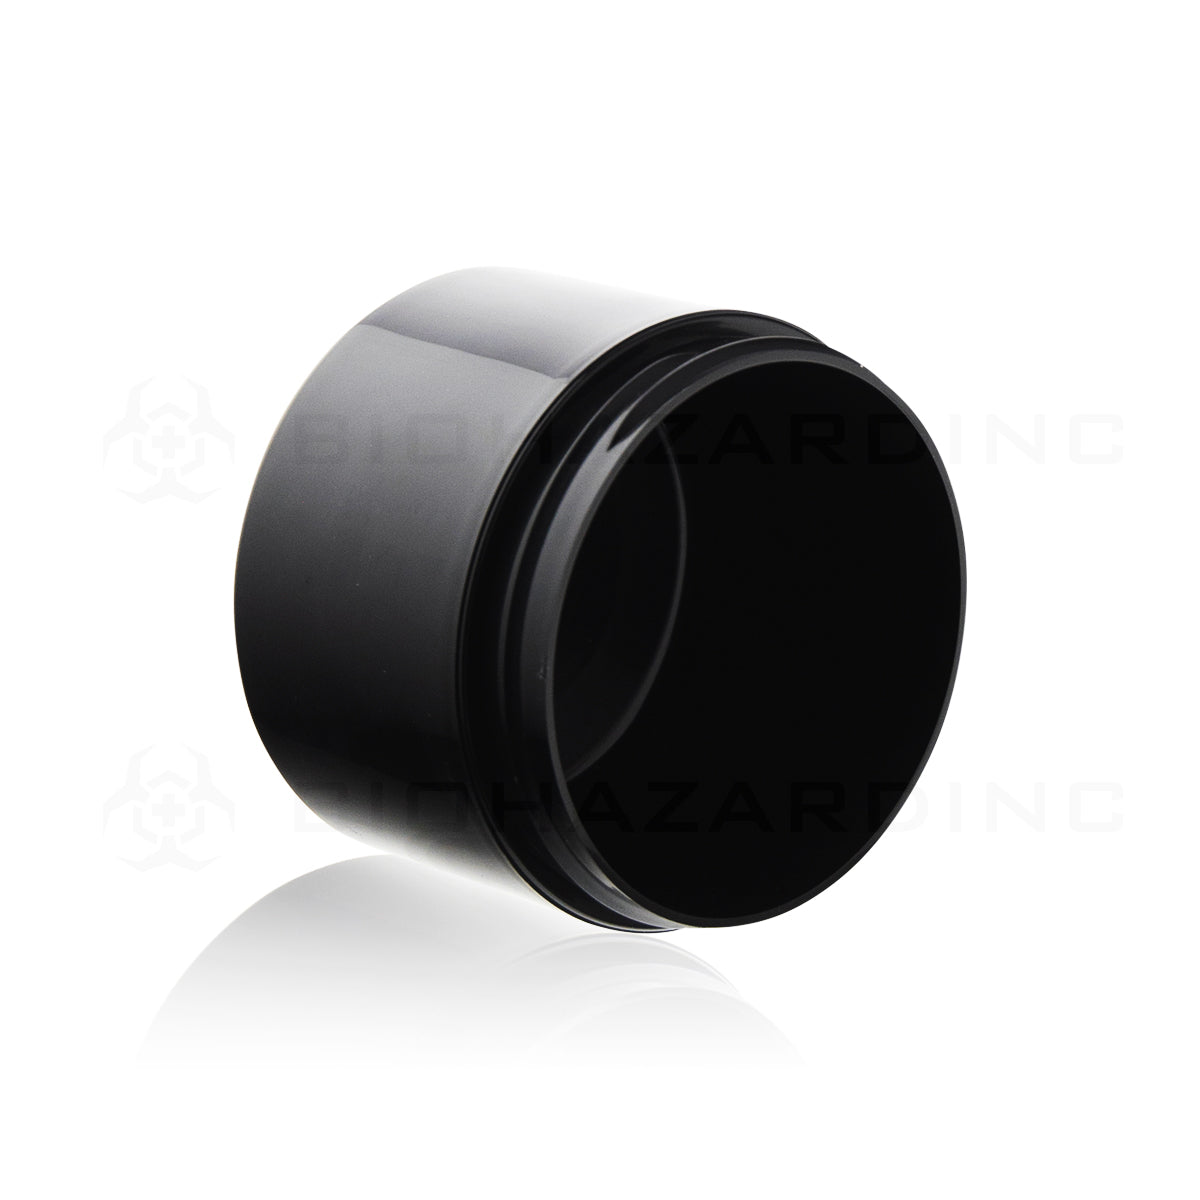 Plastic Jar | Straight Sided Double Wall Plastic Jars - Black | 89mm - 8oz - 245 count Plastic Jar Biohazard Inc   